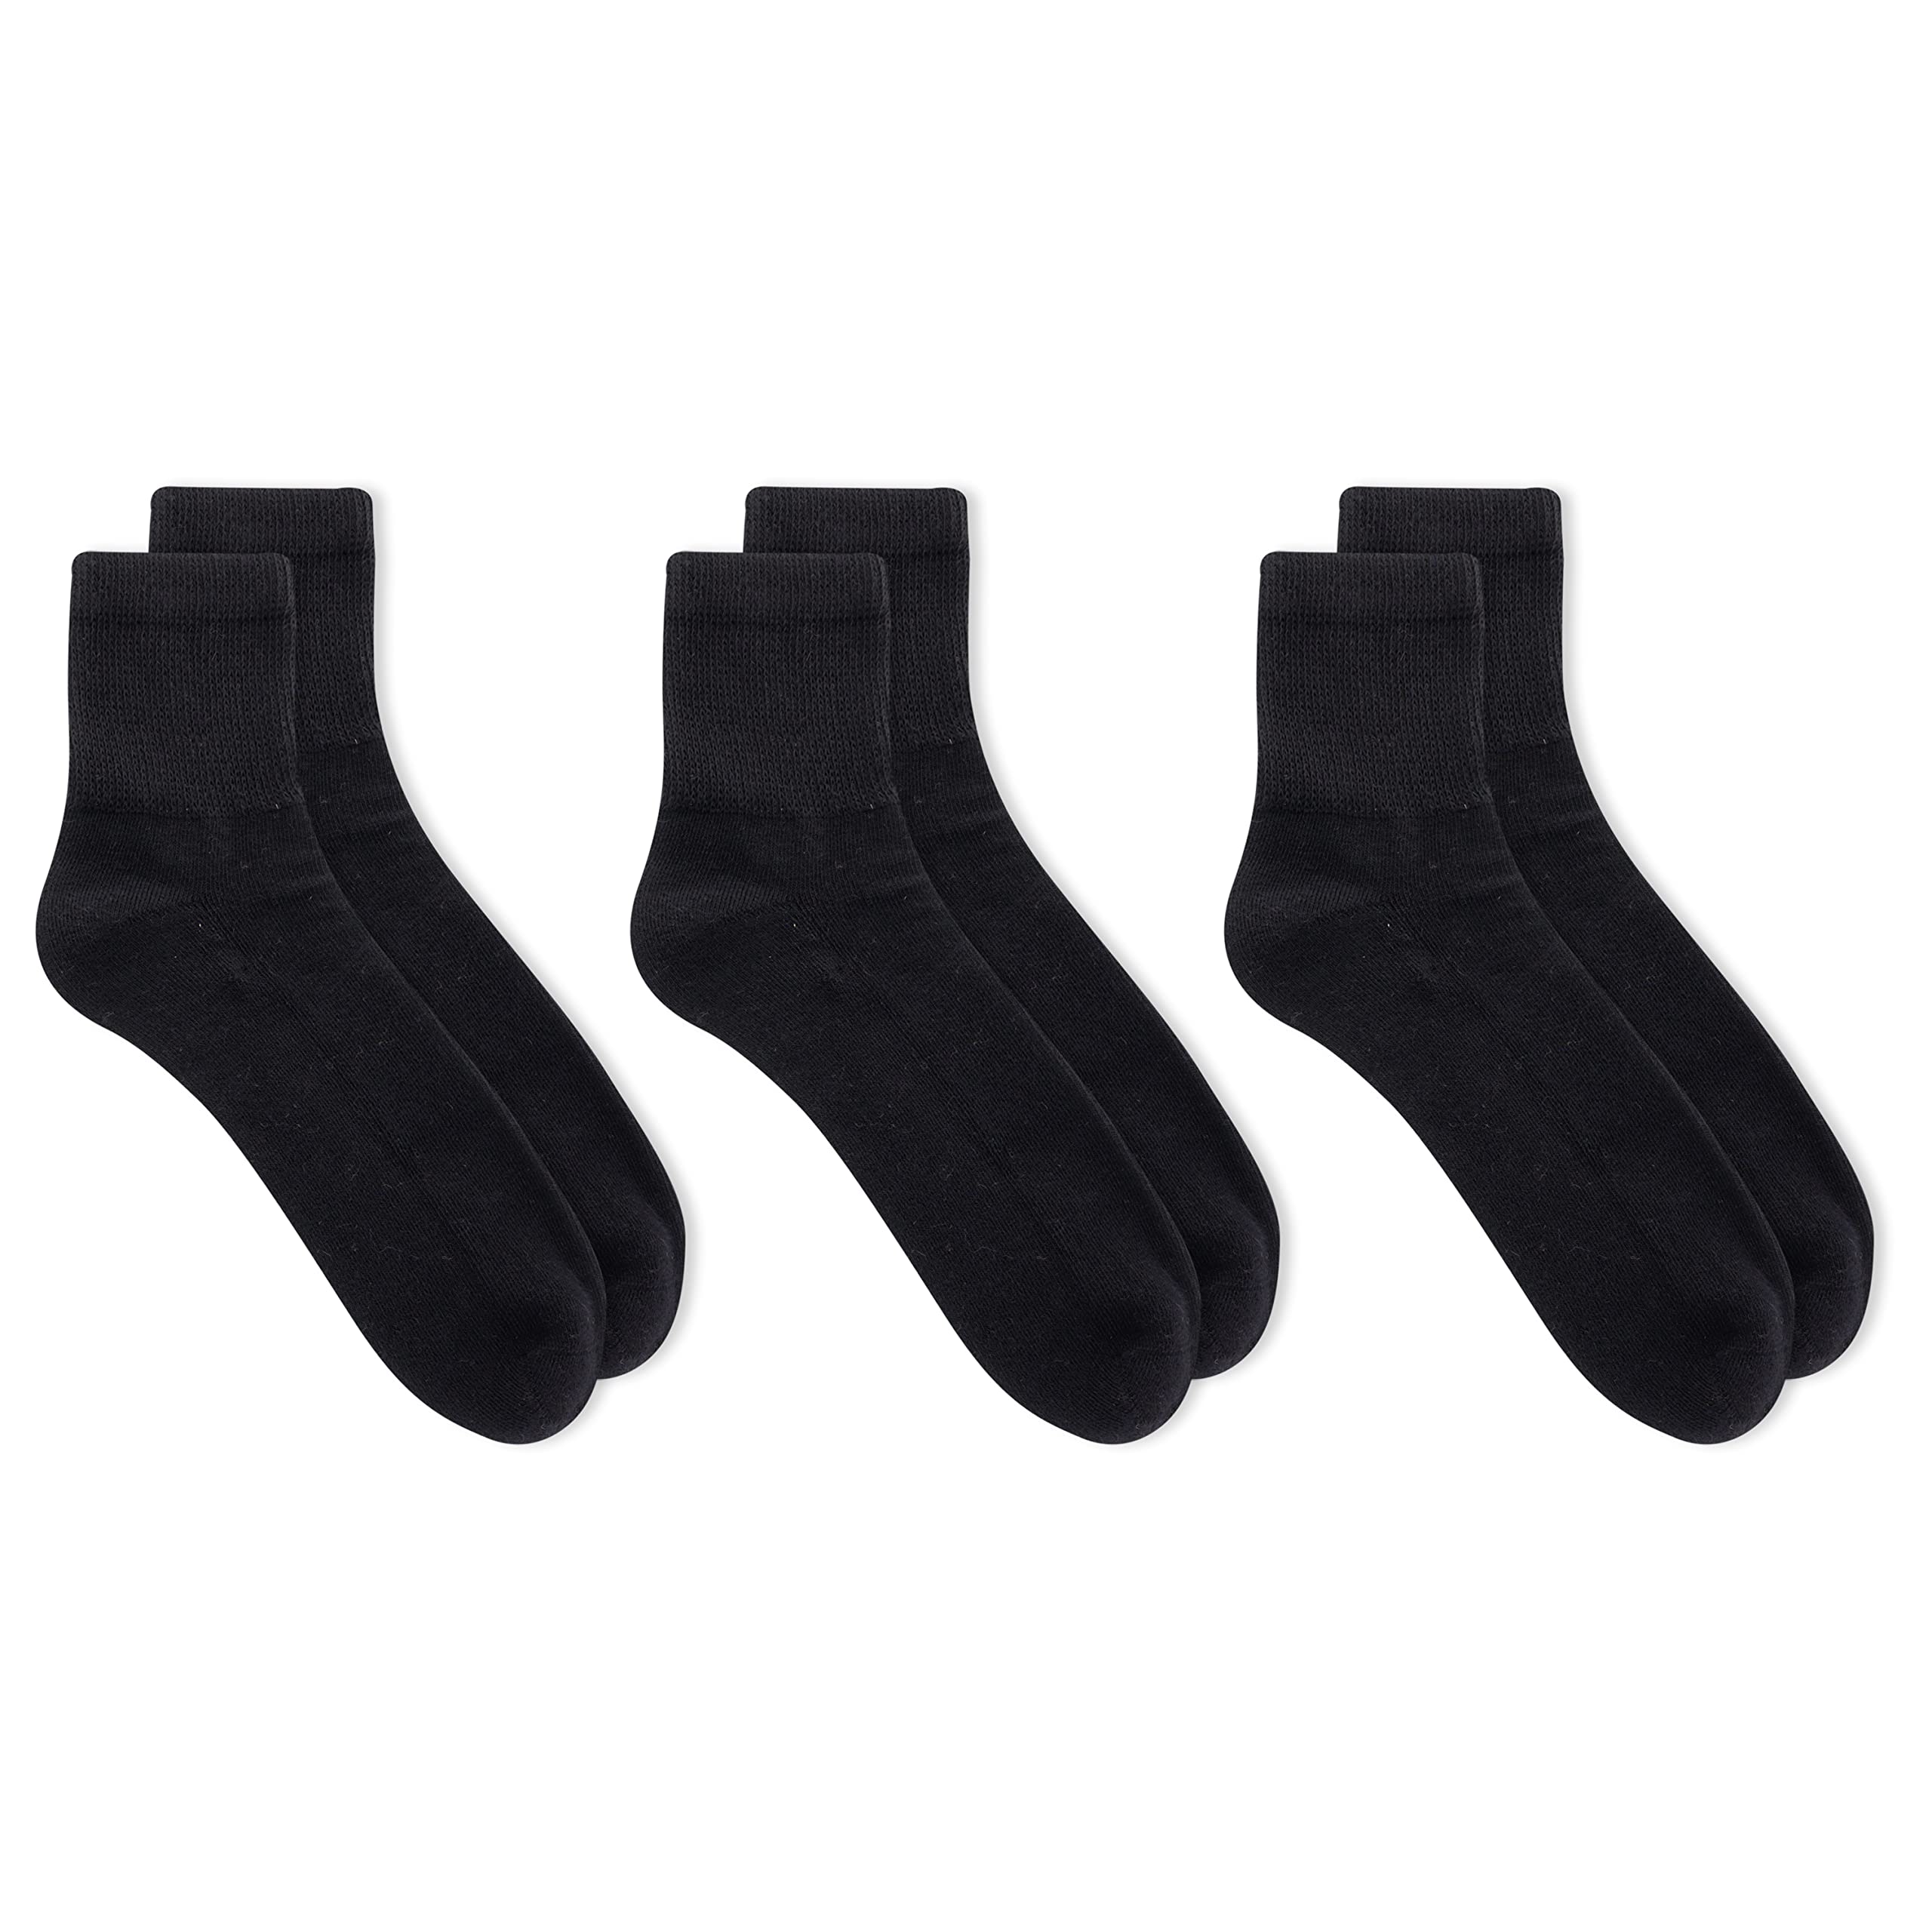 Dr. Scholl's Men's Diabetes & Circulator Socks - 3 Pair Pack - Non-Binding Comfort and Moisture Management